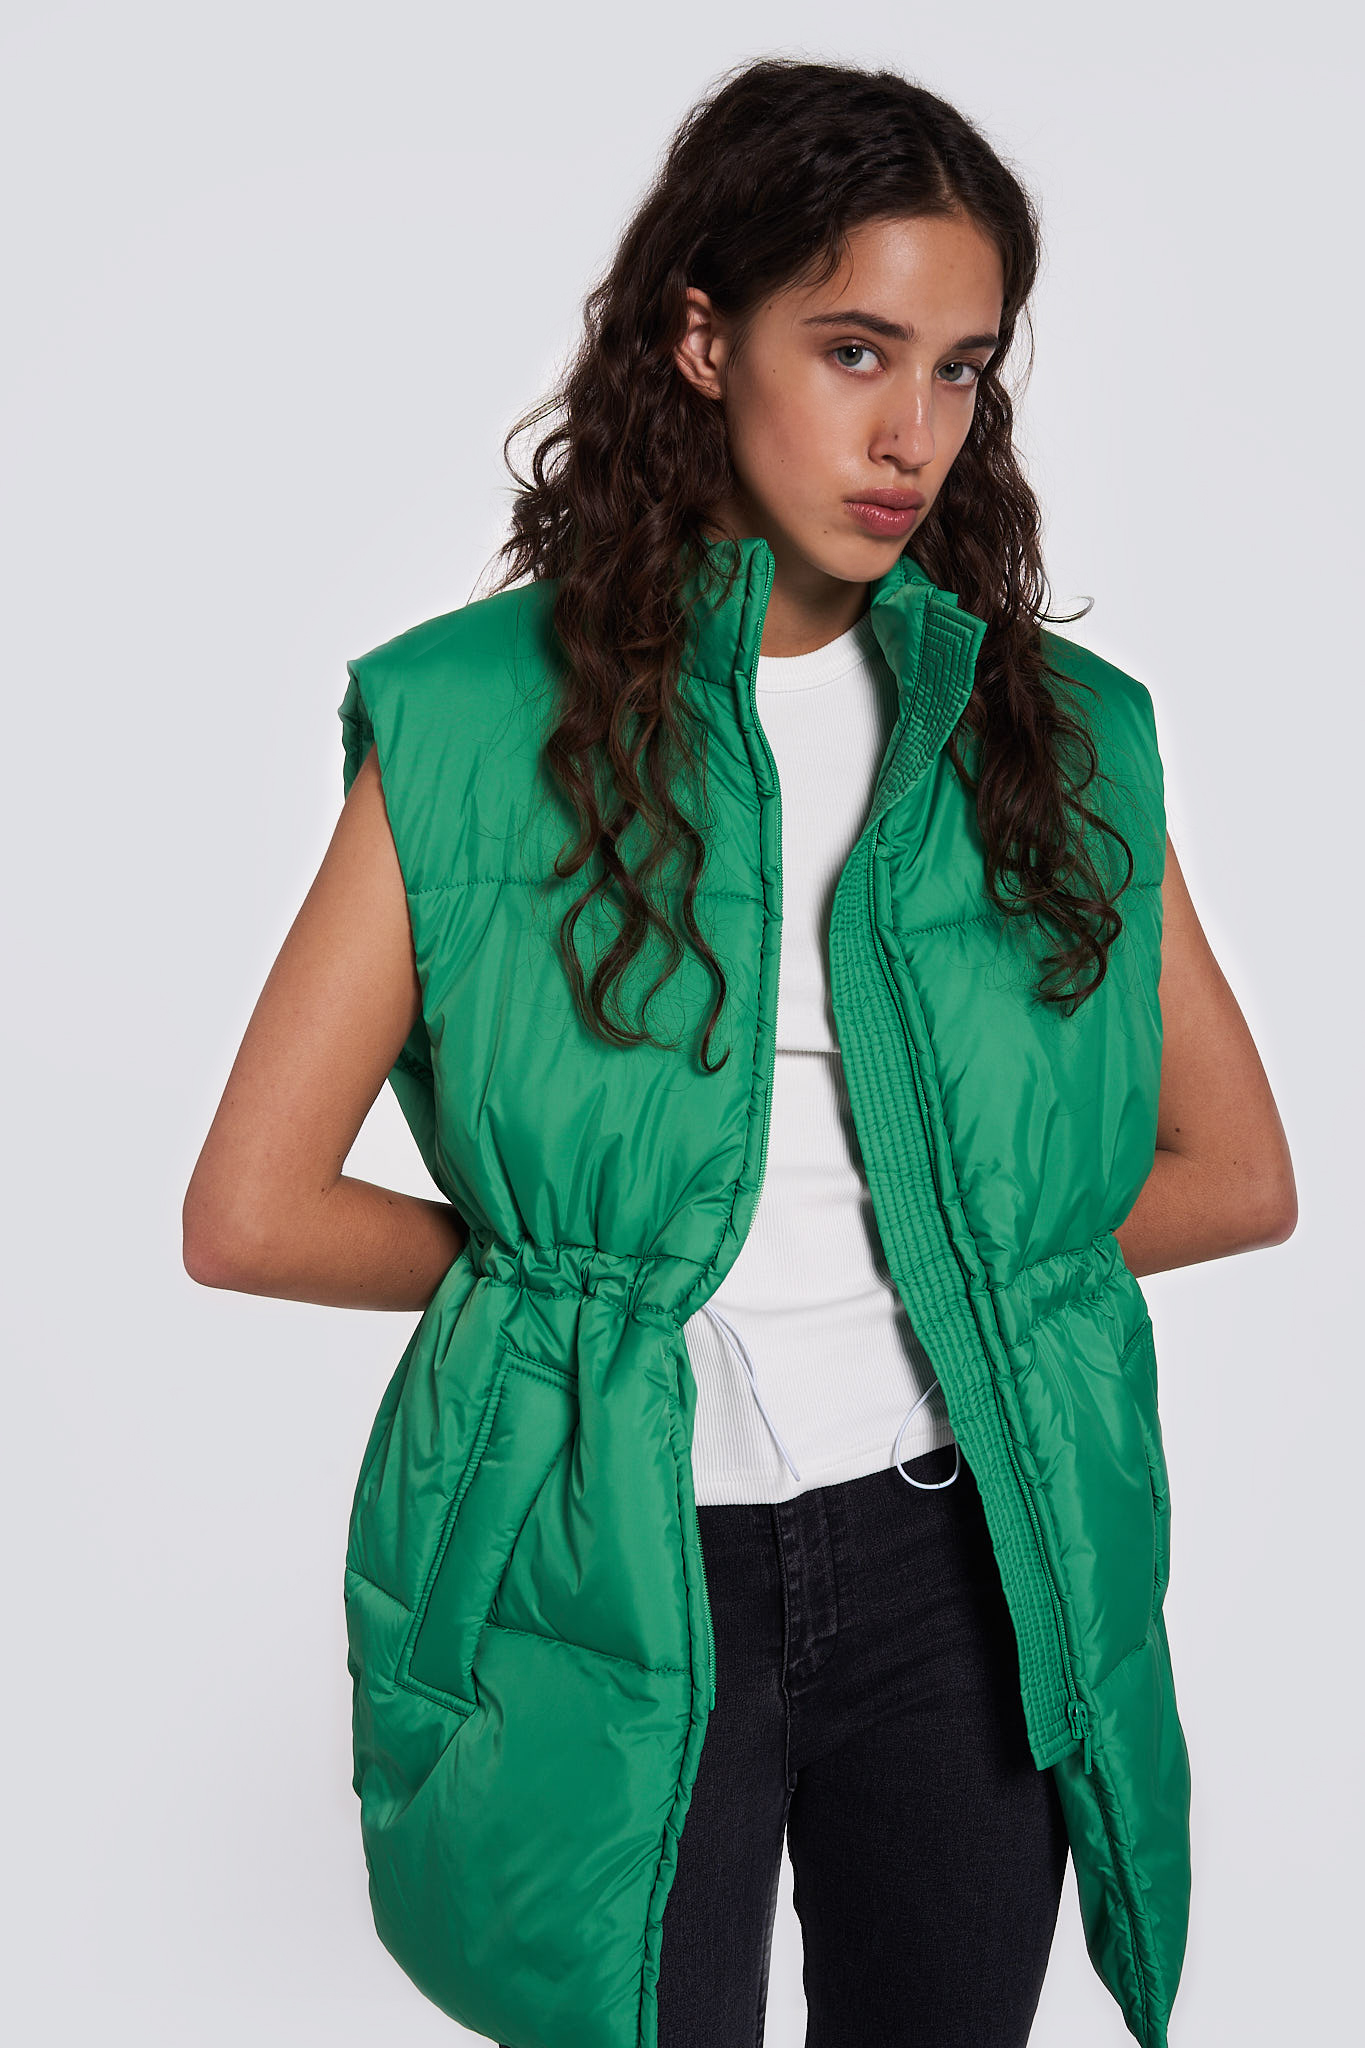 vest 3.0 in green color